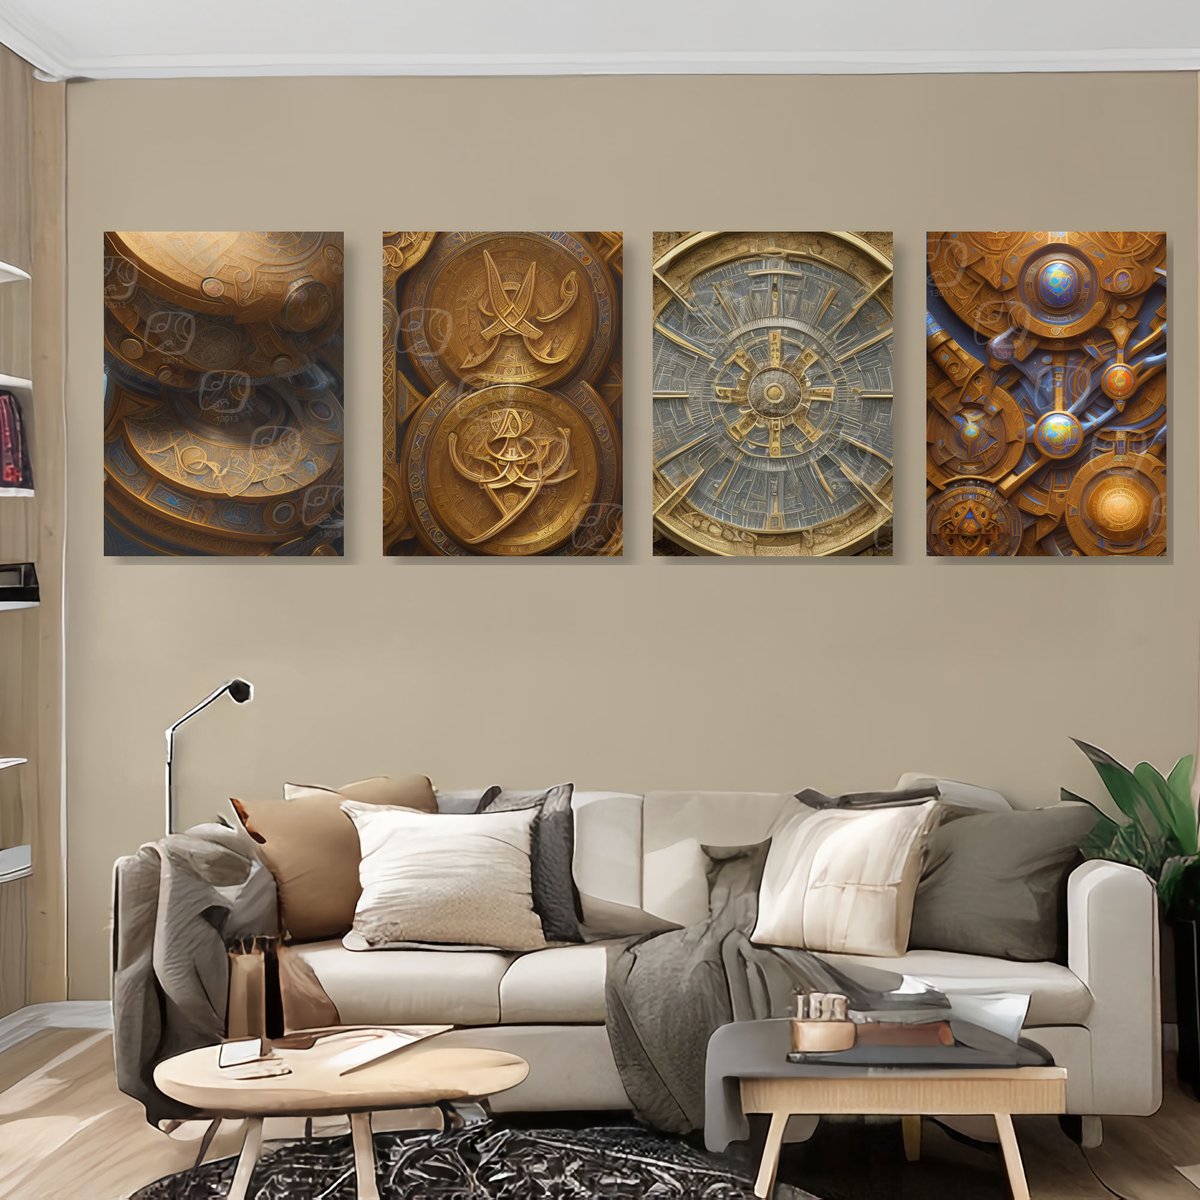 Original art for your living room
etsy.com/listing/137867…… #art #originalart #digitalart #design #diningroom #painting #manuscript #illuminatedmanuscript